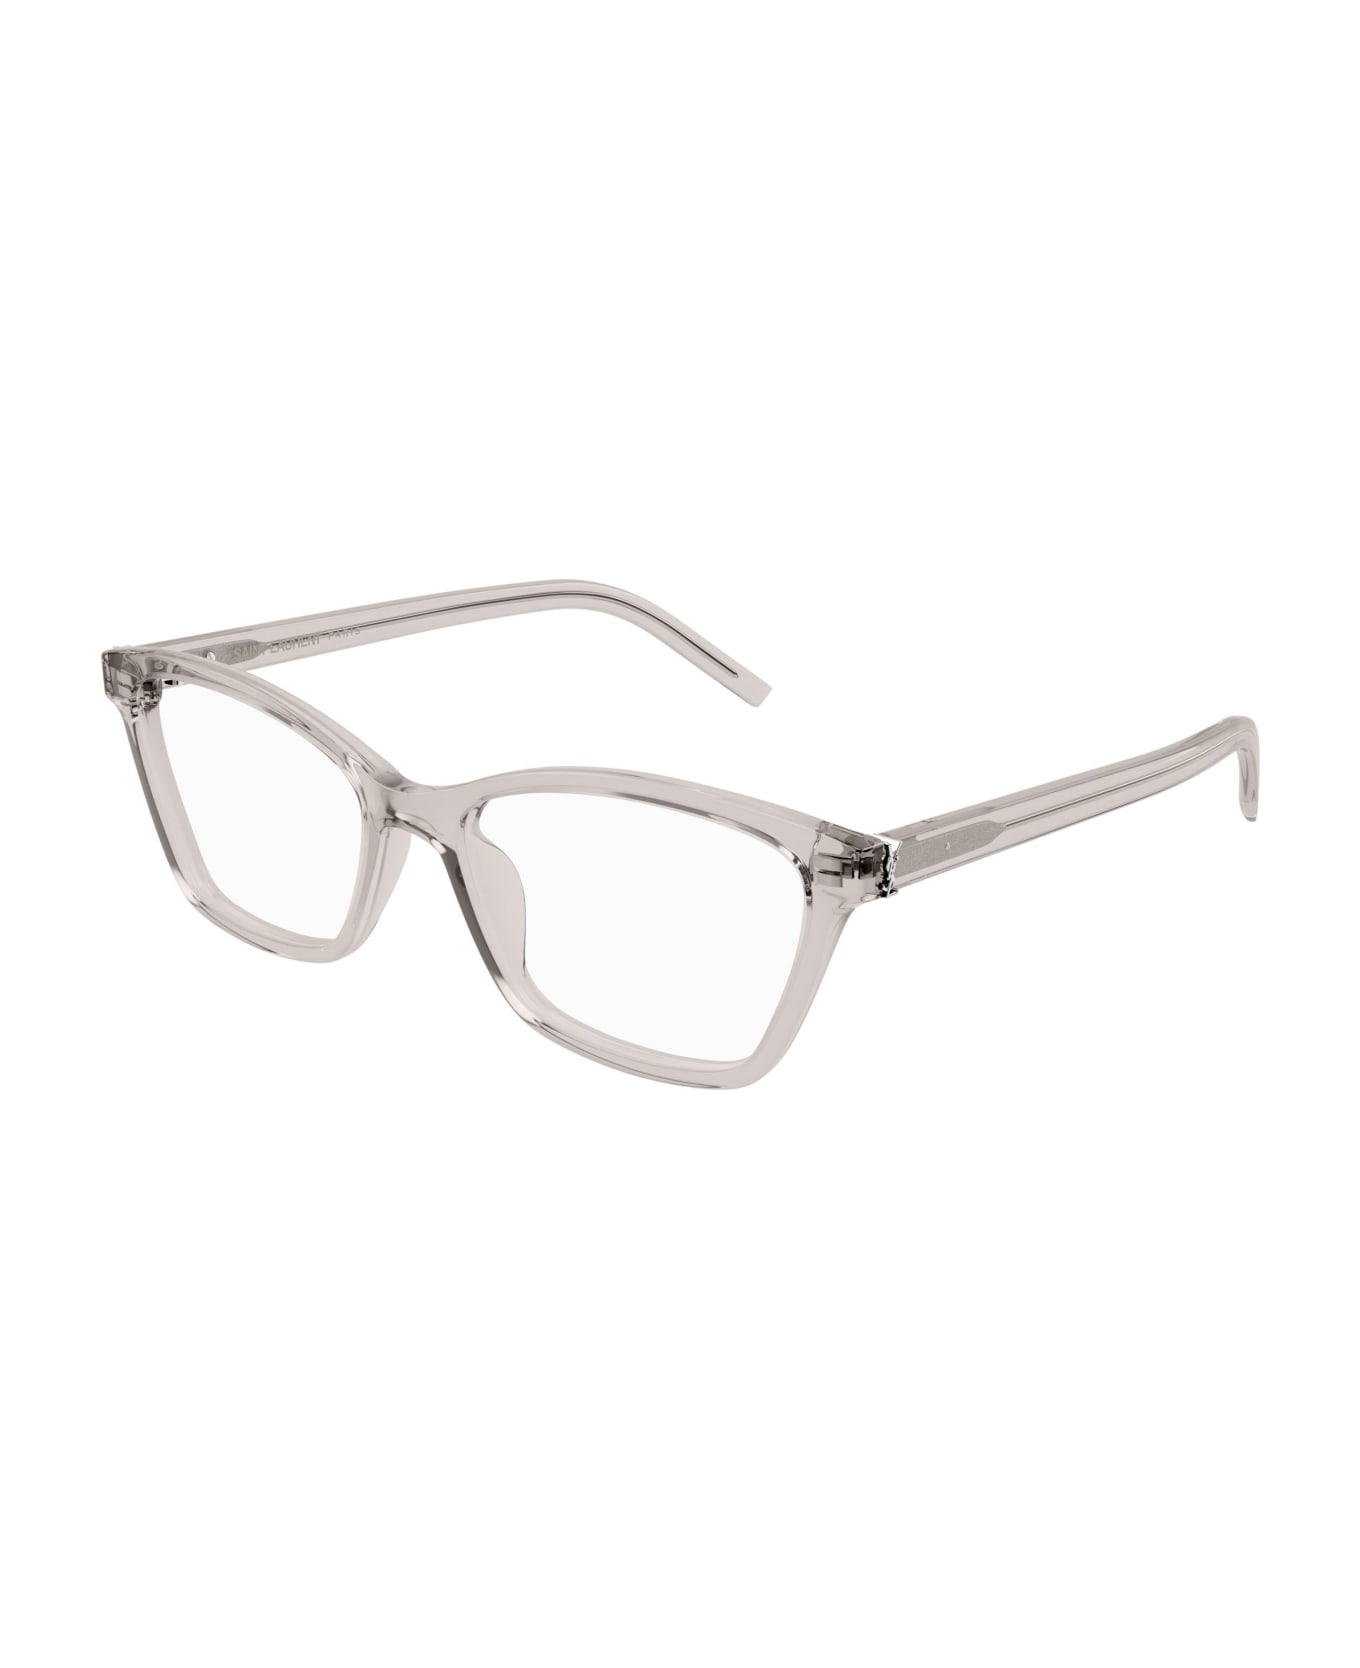 Saint Laurent Eyewear Glasses - Beige